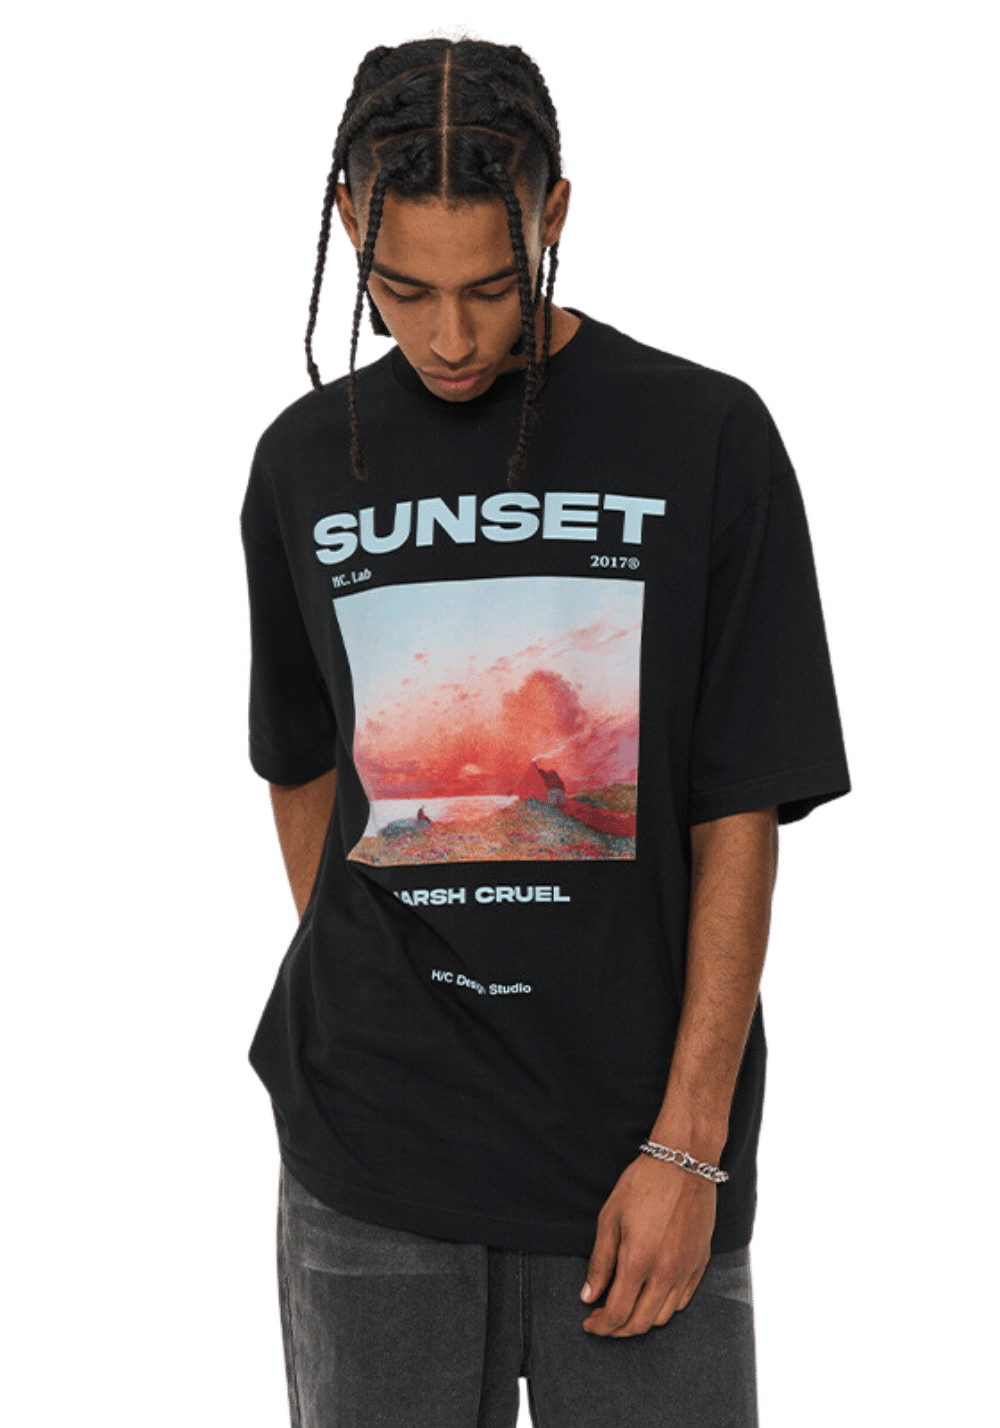 Sunset Oil Painting T-shirt - PSYLOS 1, Sunset Oil Painting T-shirt, T-Shirt, HARSH AND CRUEL, PSYLOS 1